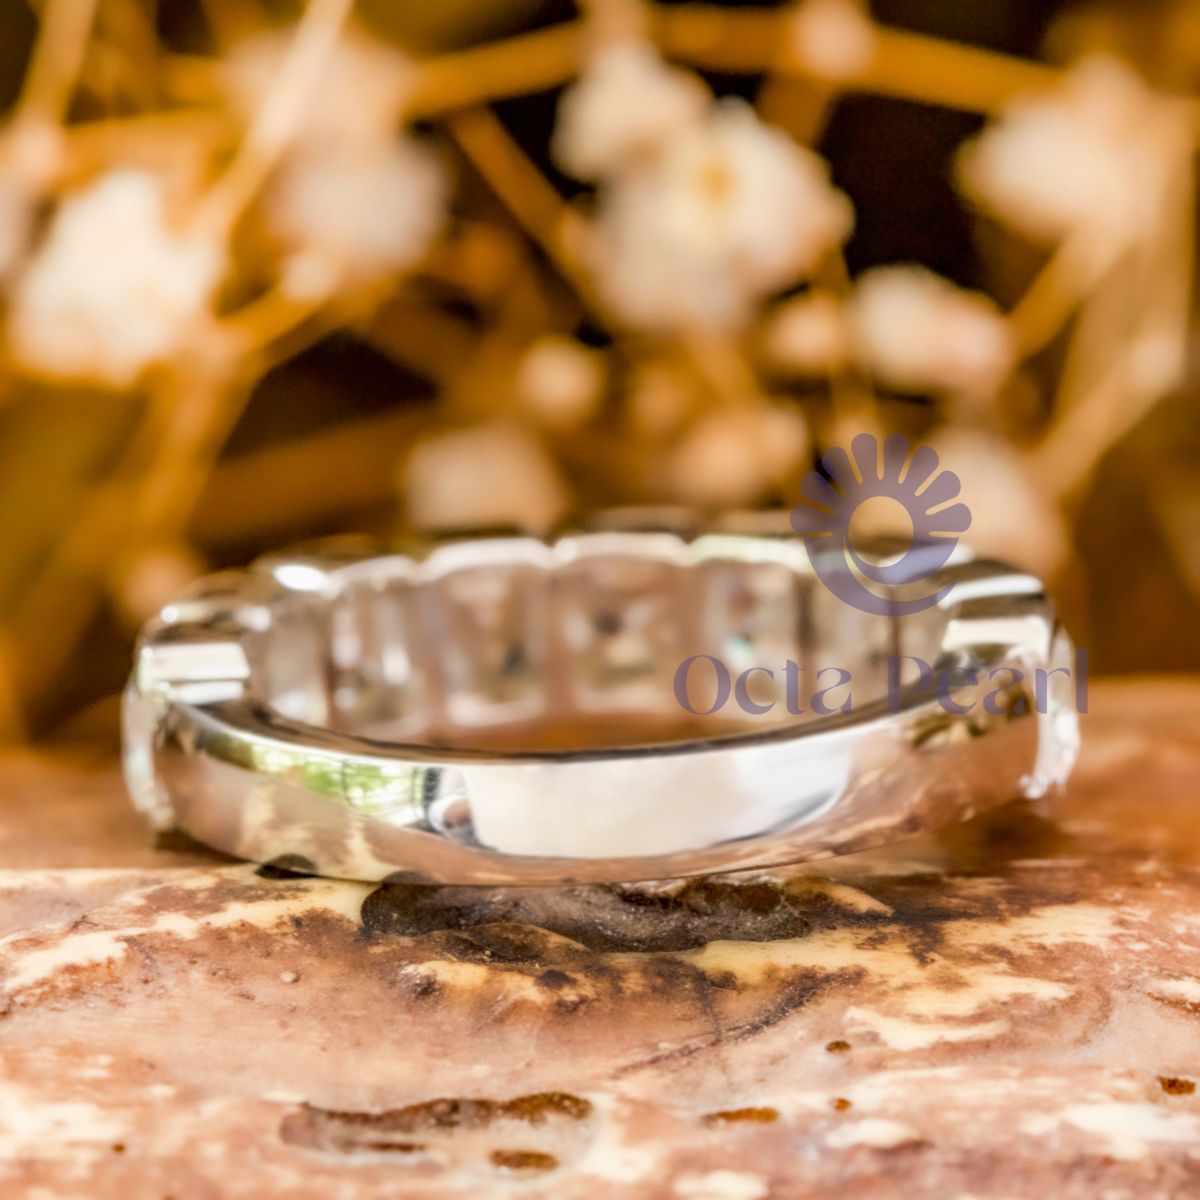 Half Bezel Set Asscher CZ Nine Stone Wedding Ring